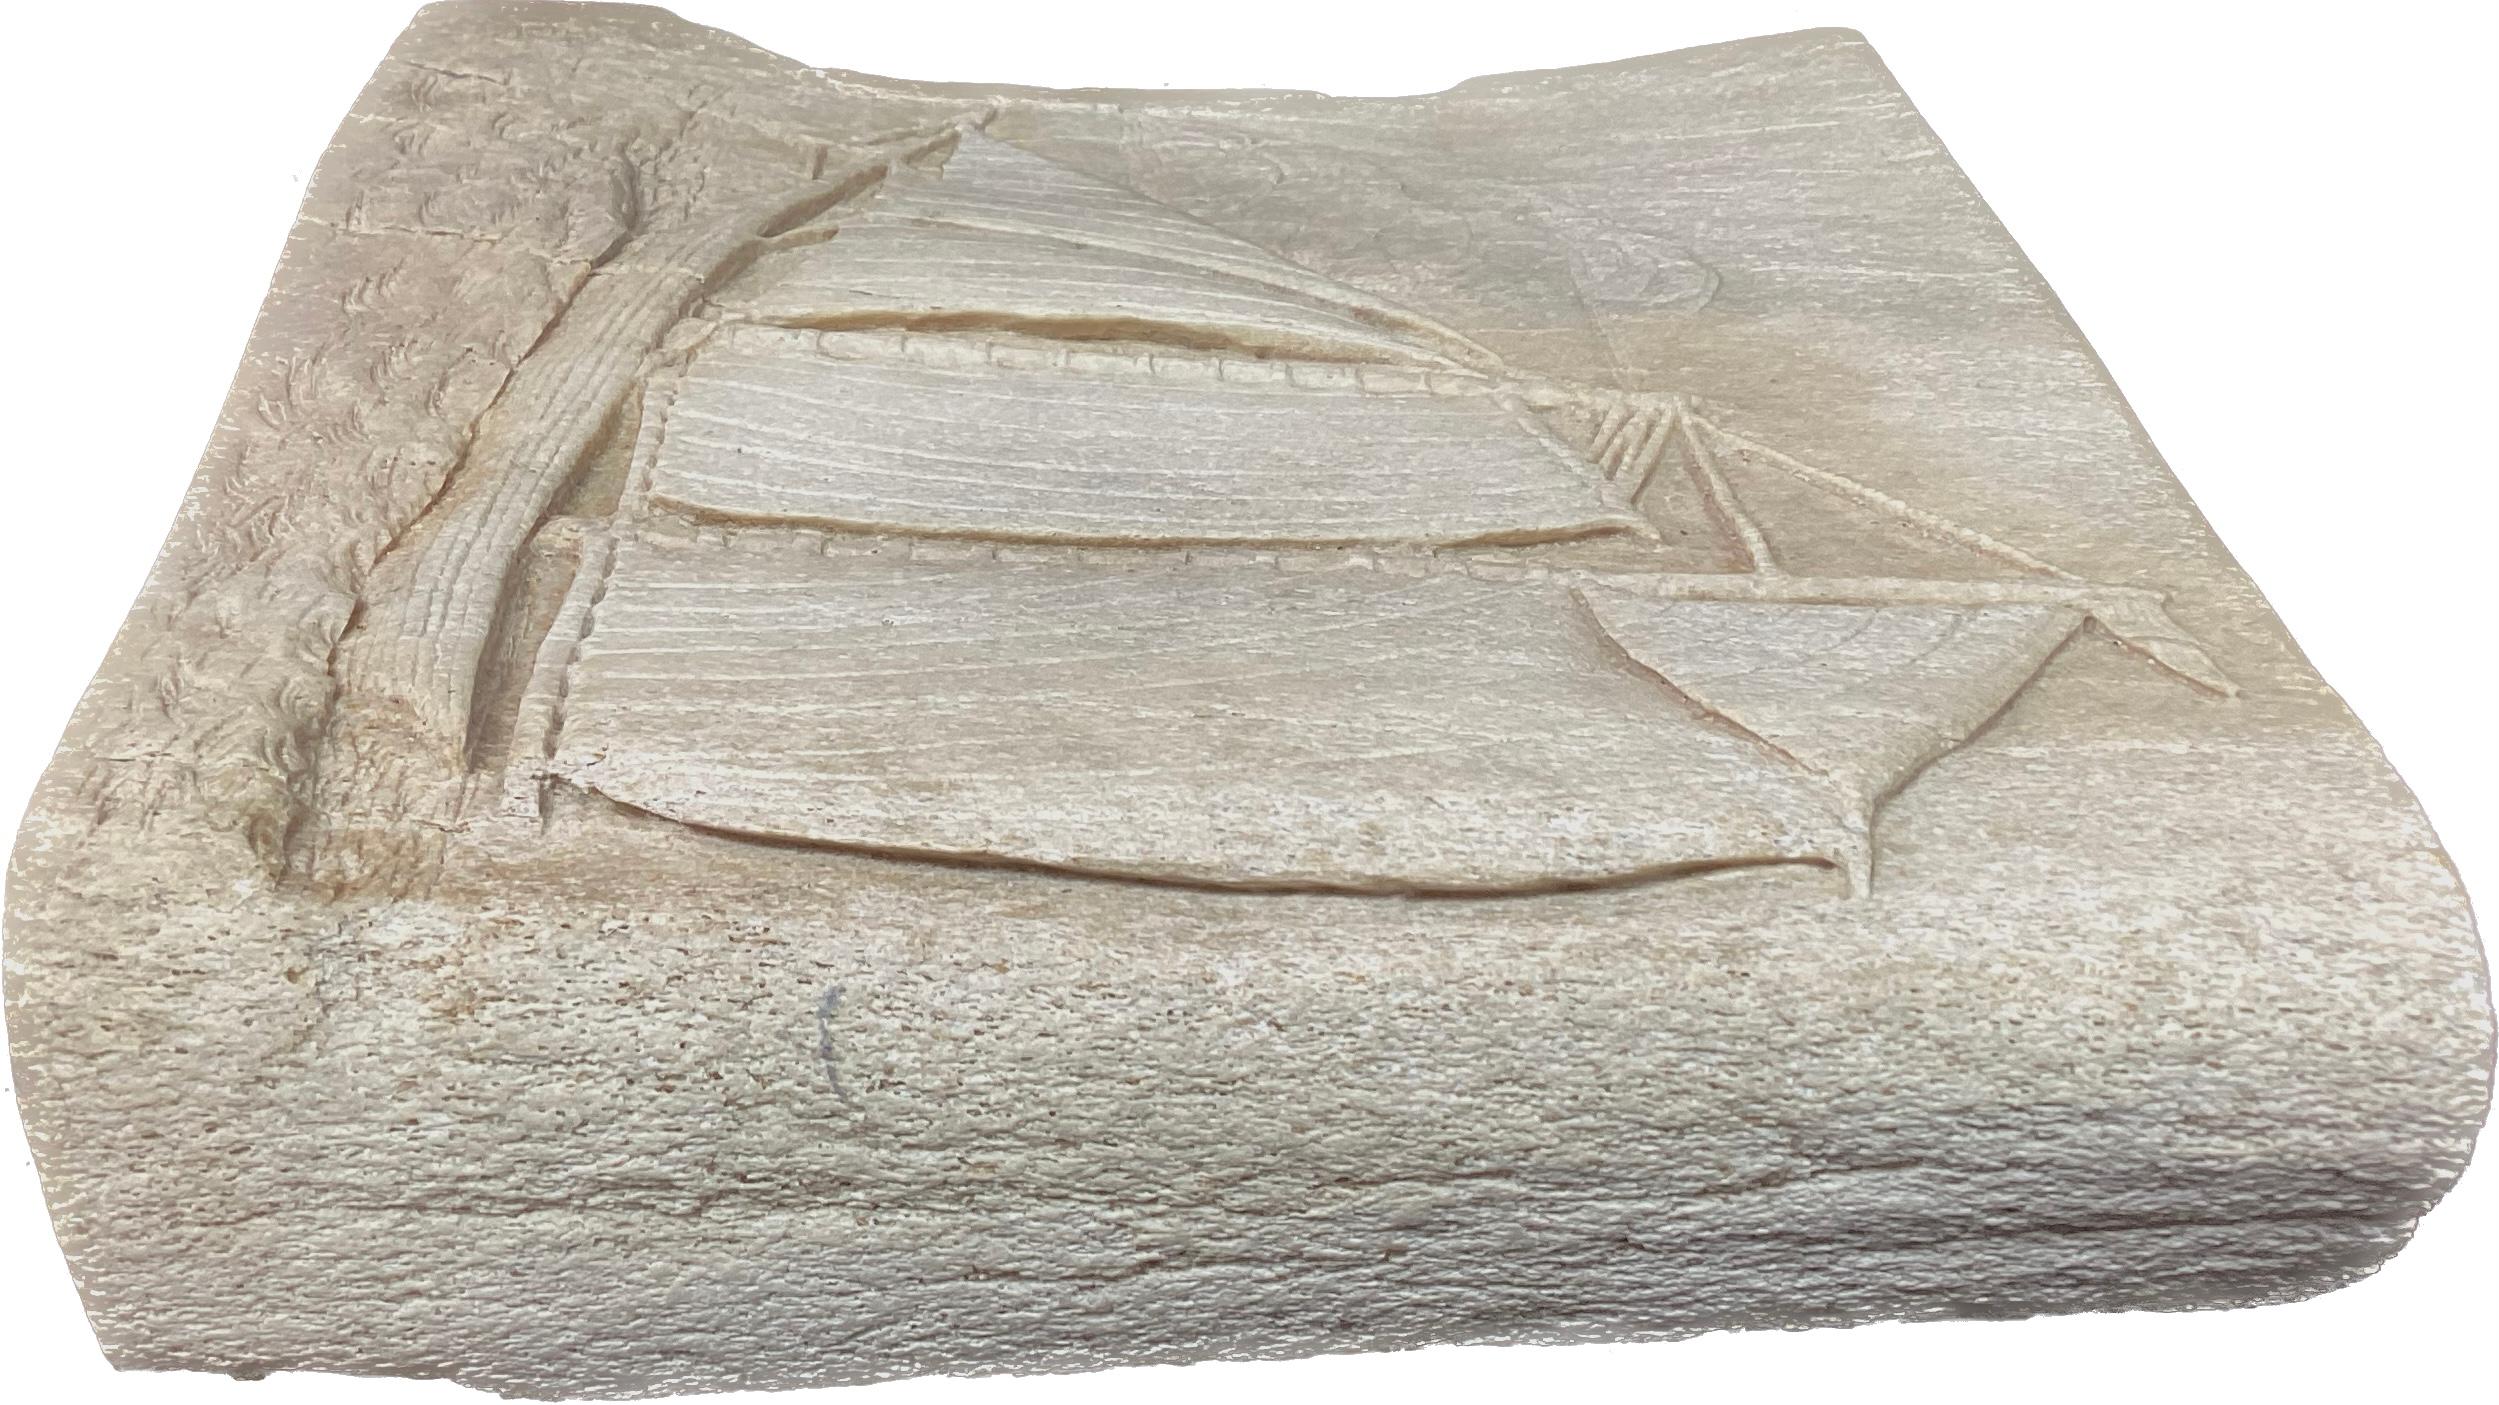 Inuit Fossilized Whale Bone Sculpture #13 For Sale 2